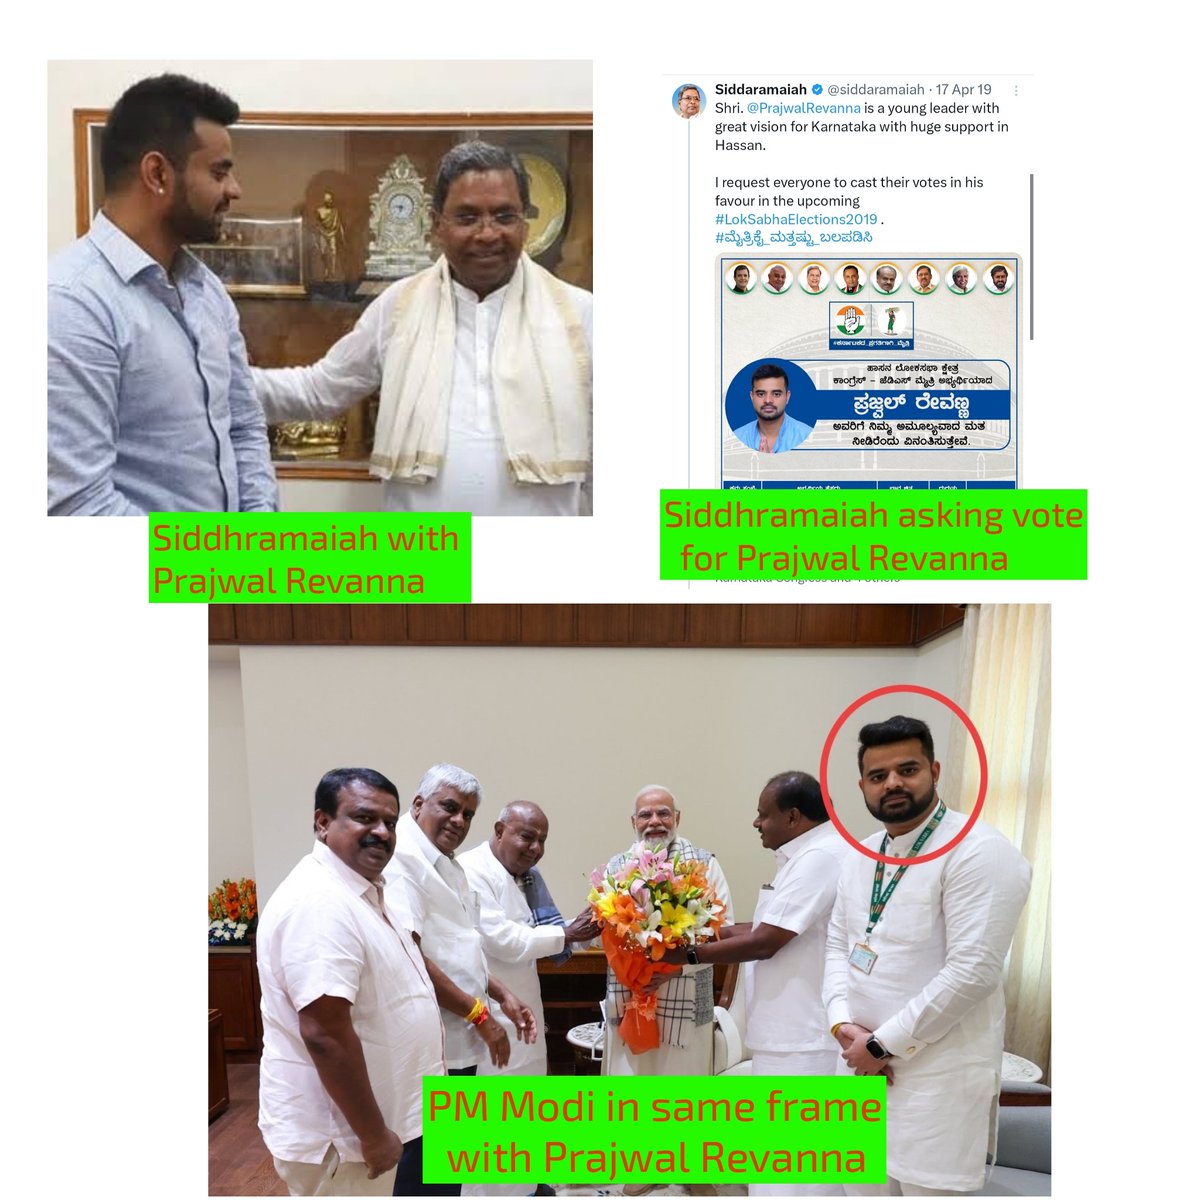 -Karnataka CM Siddhramaiah seeks vote for Prajwal Revanna, meets him personally : No word against Siddhramaiah by seculars -Prajwal Revanna is seen in a frame with PM Modi : Seculars are abusing PM Modi